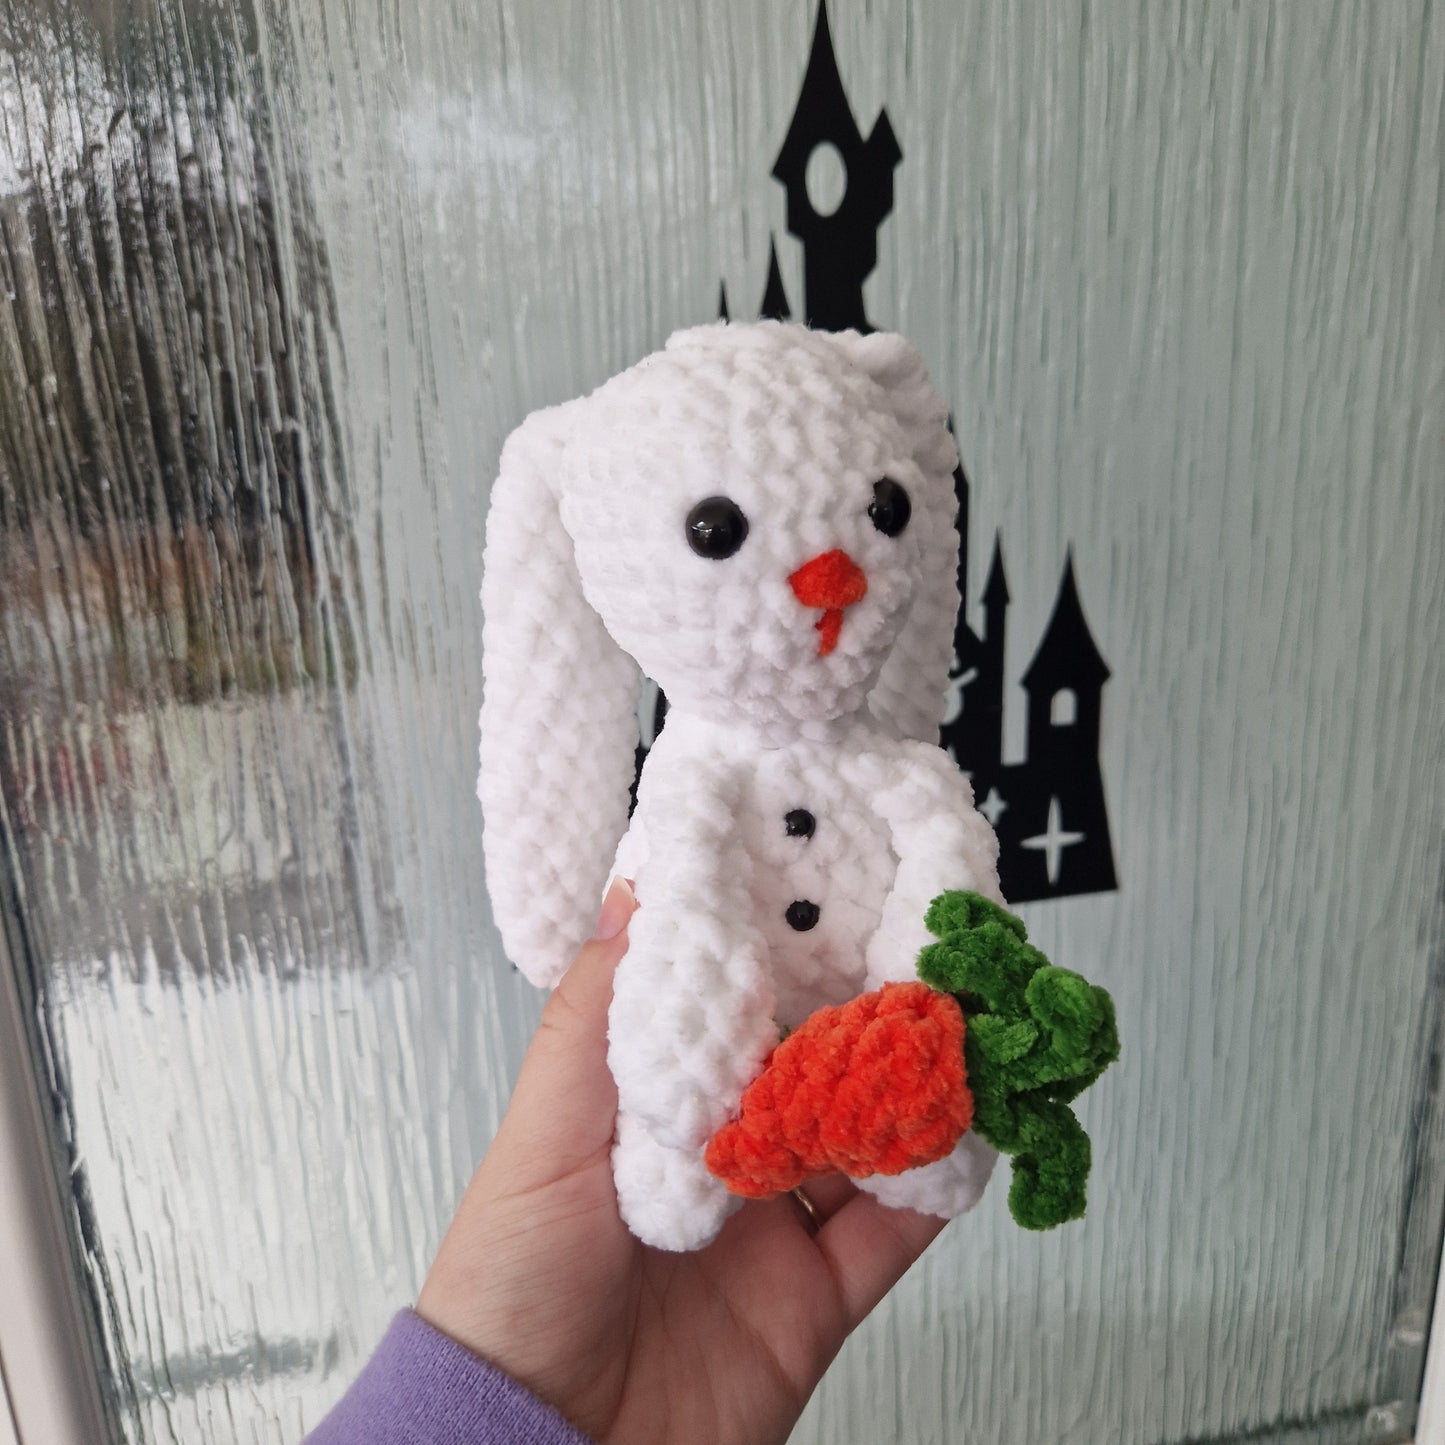 Chunky, super soft crochet snow bunny with a carrot